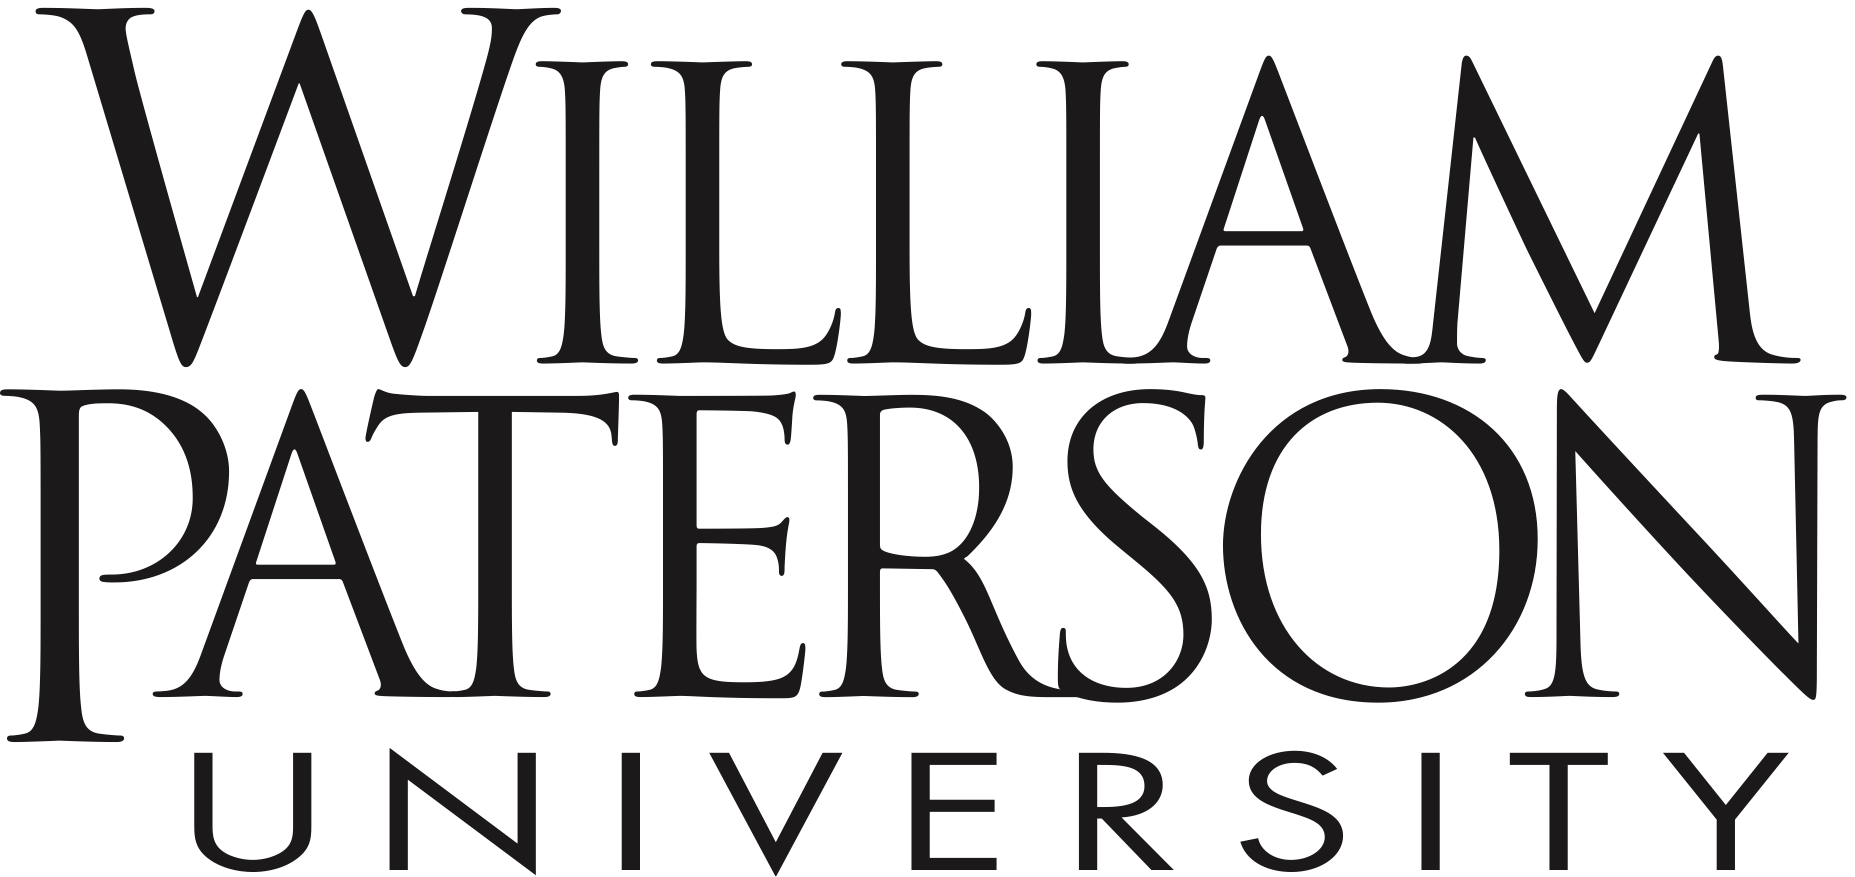 William Paterson University stacked logo